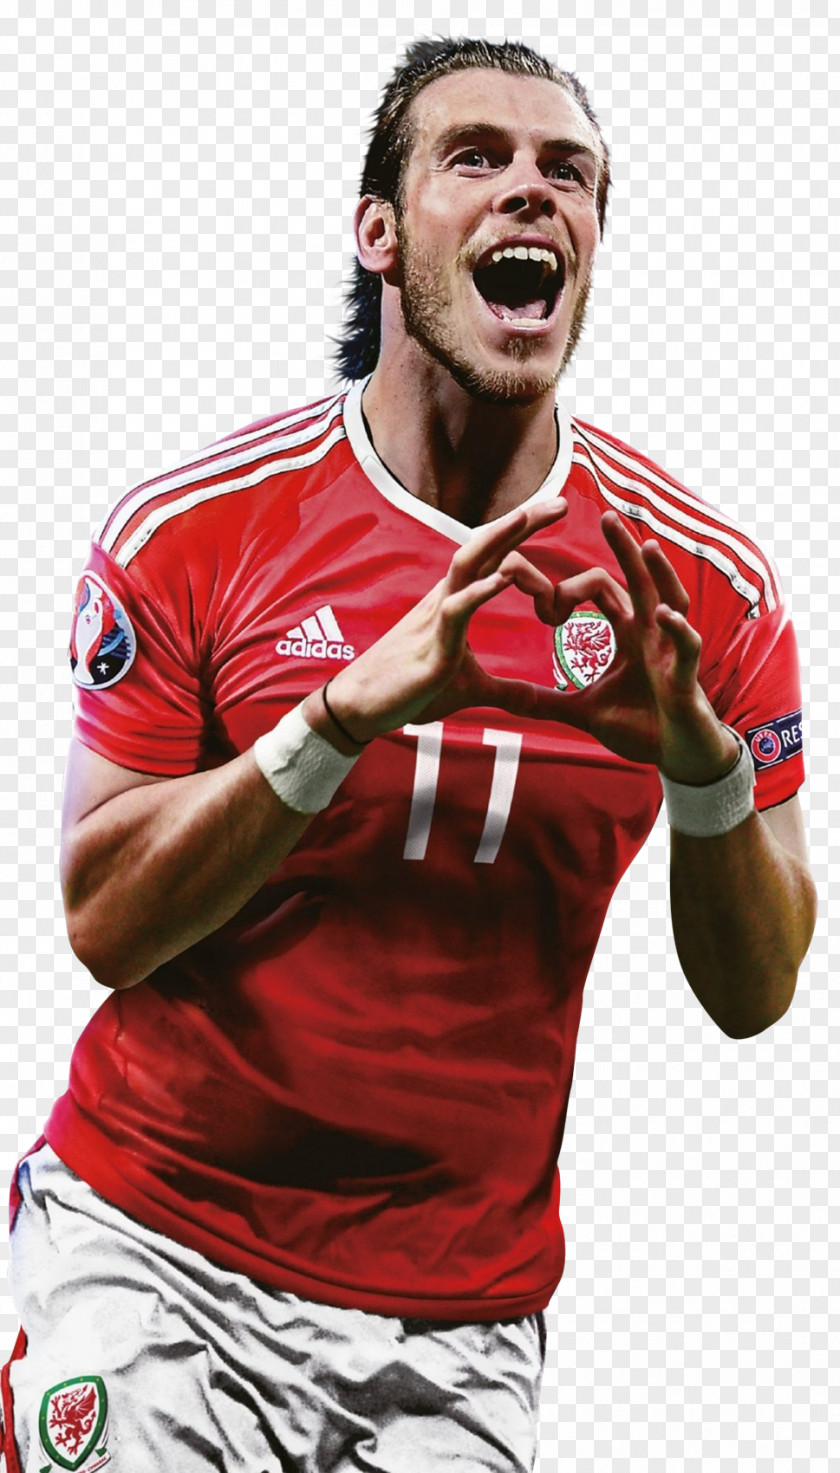 Christian Bale Gareth Pro Evolution Soccer 2016 UEFA Euro 2011 Wales National Football Team PNG